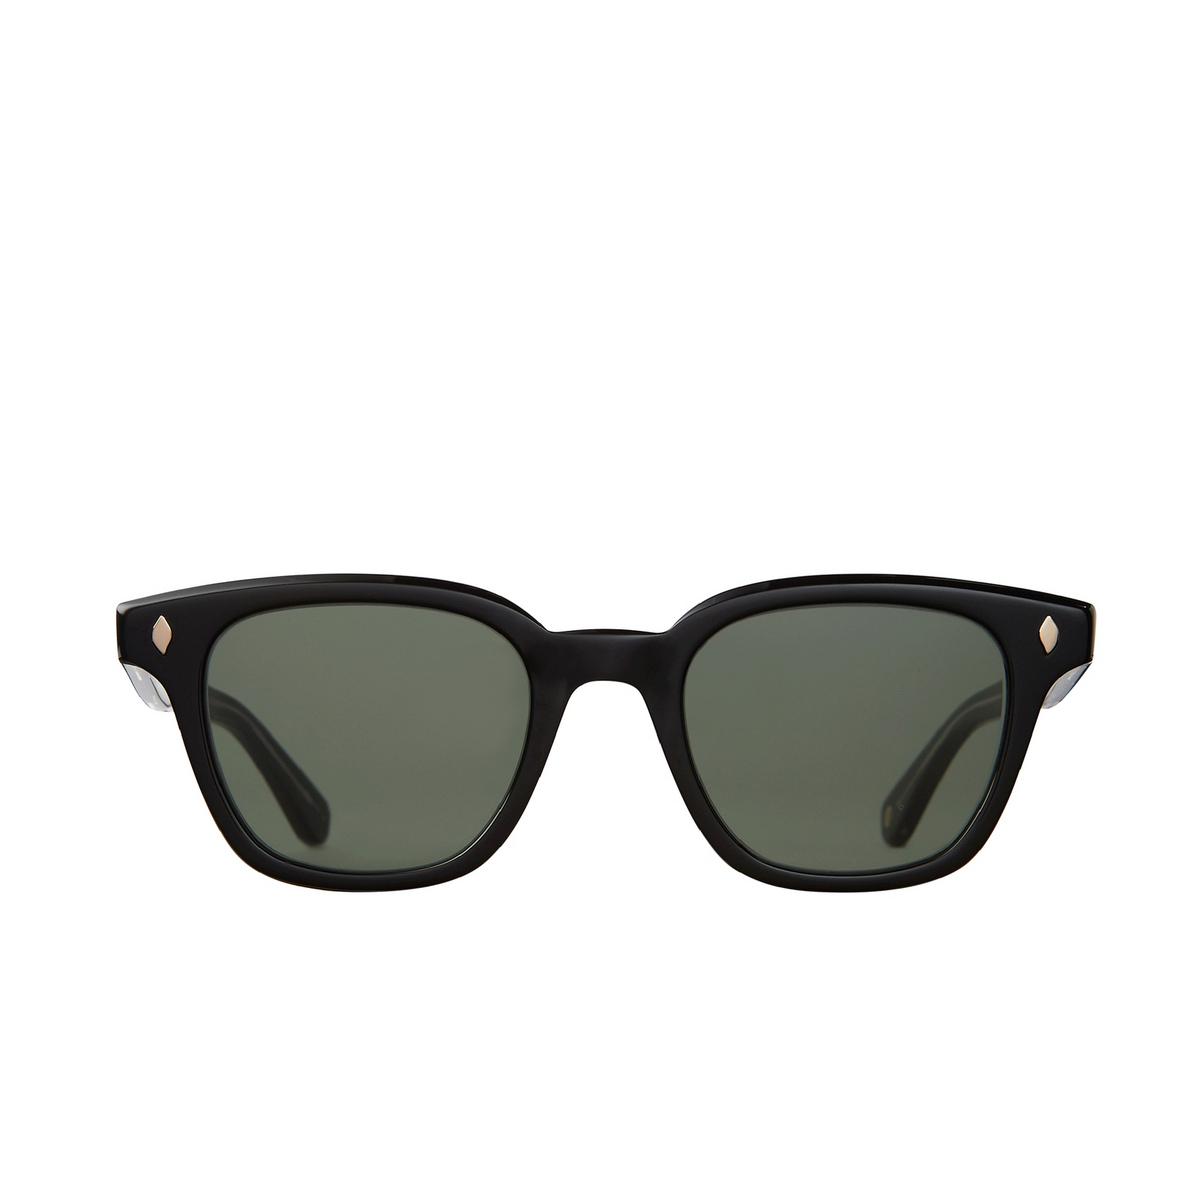 Garrett Leight BROADWAY Sunglasses BK/SFPG15 Black/Semi-Flat Pure G15 - front view